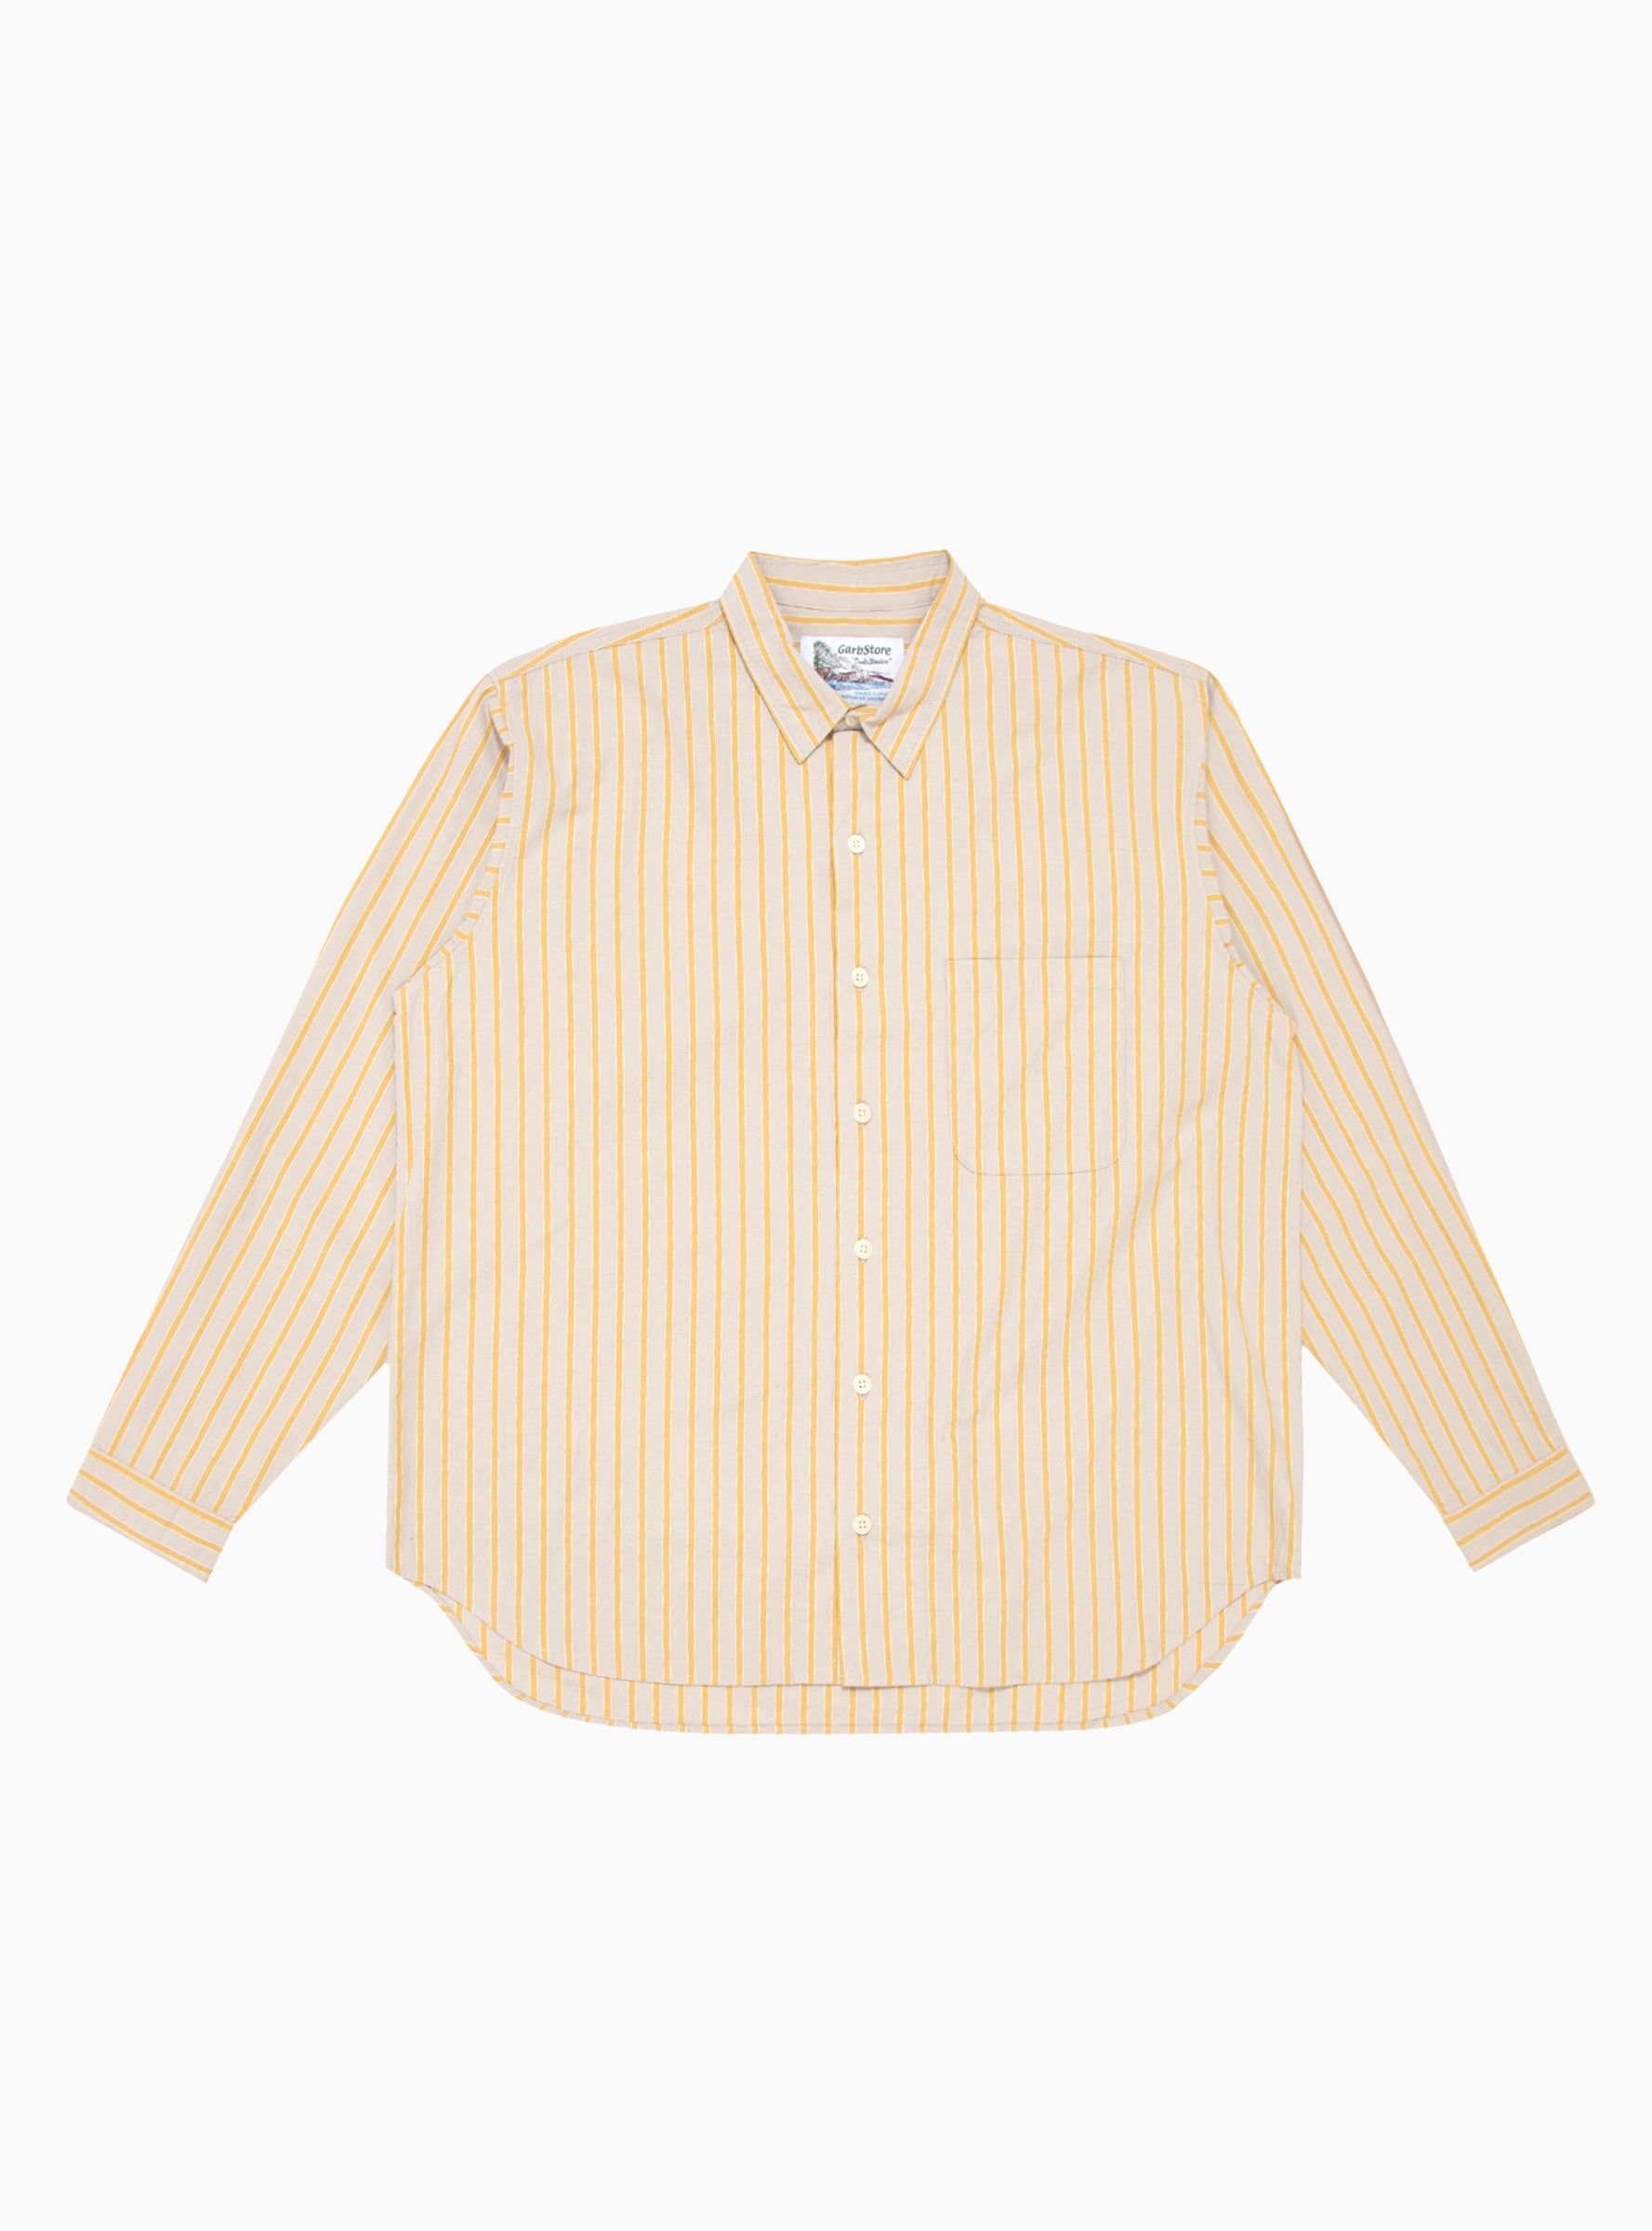 Grande V2 Shirt Ecru & Yellow Stripe by Garbstore | Couverture & The ...